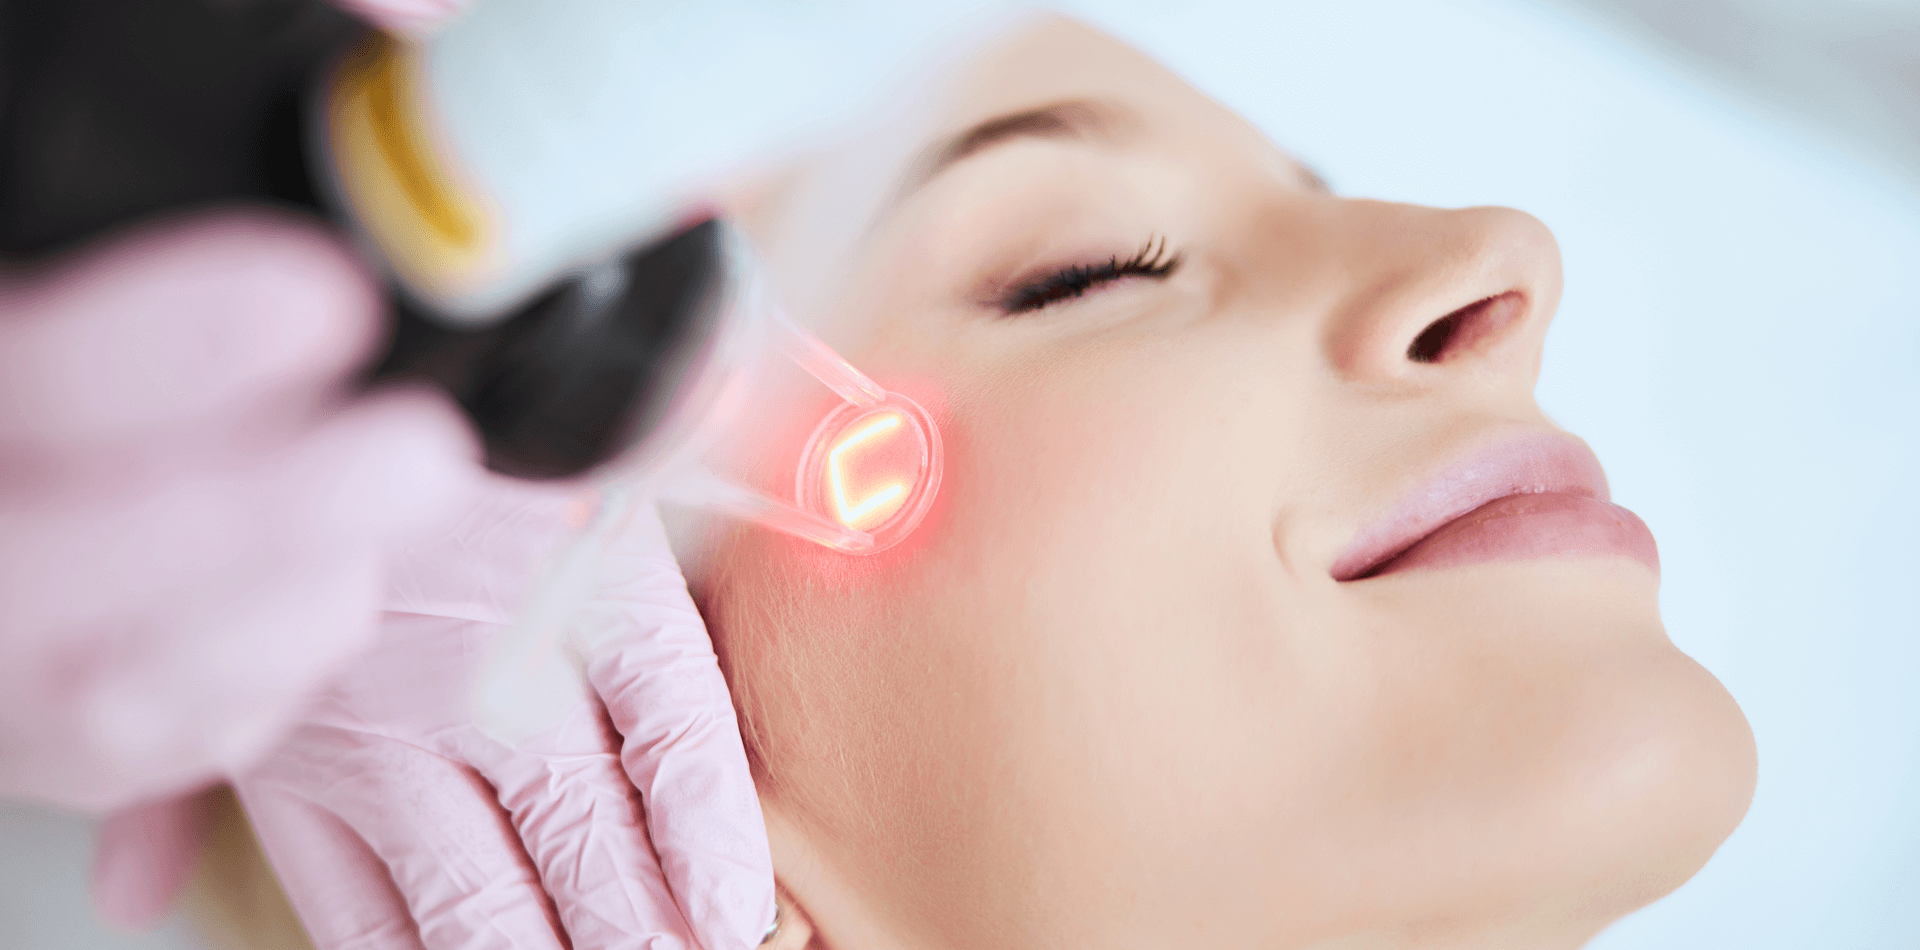 Laser Skin Rejuvenation/ Resurfacing Procedure FAQs